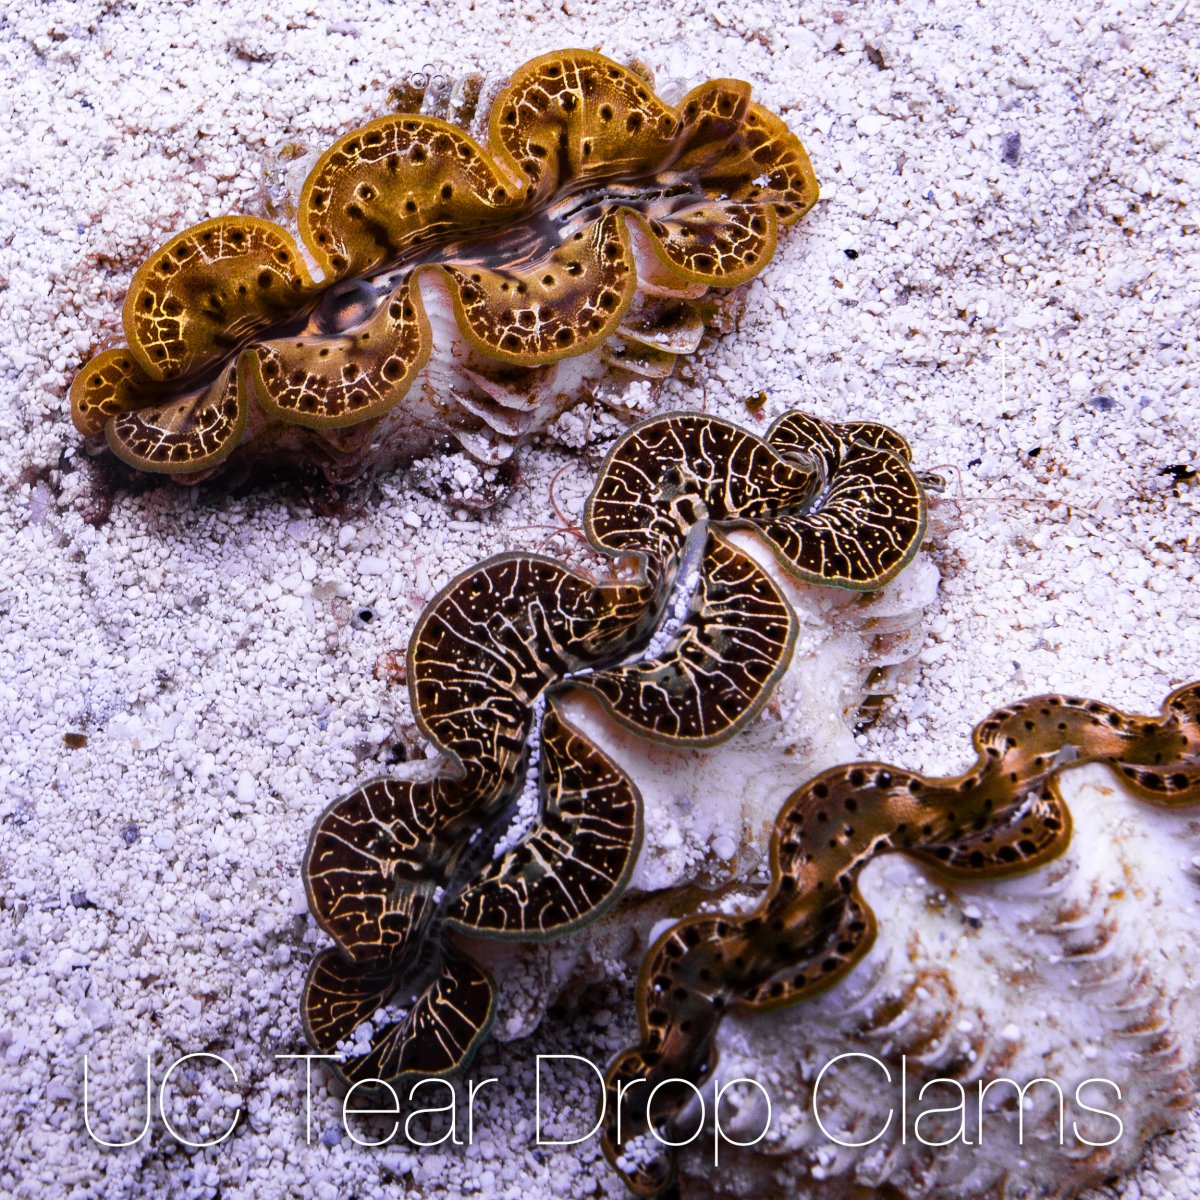 Uc-teardrop-clams.jpg